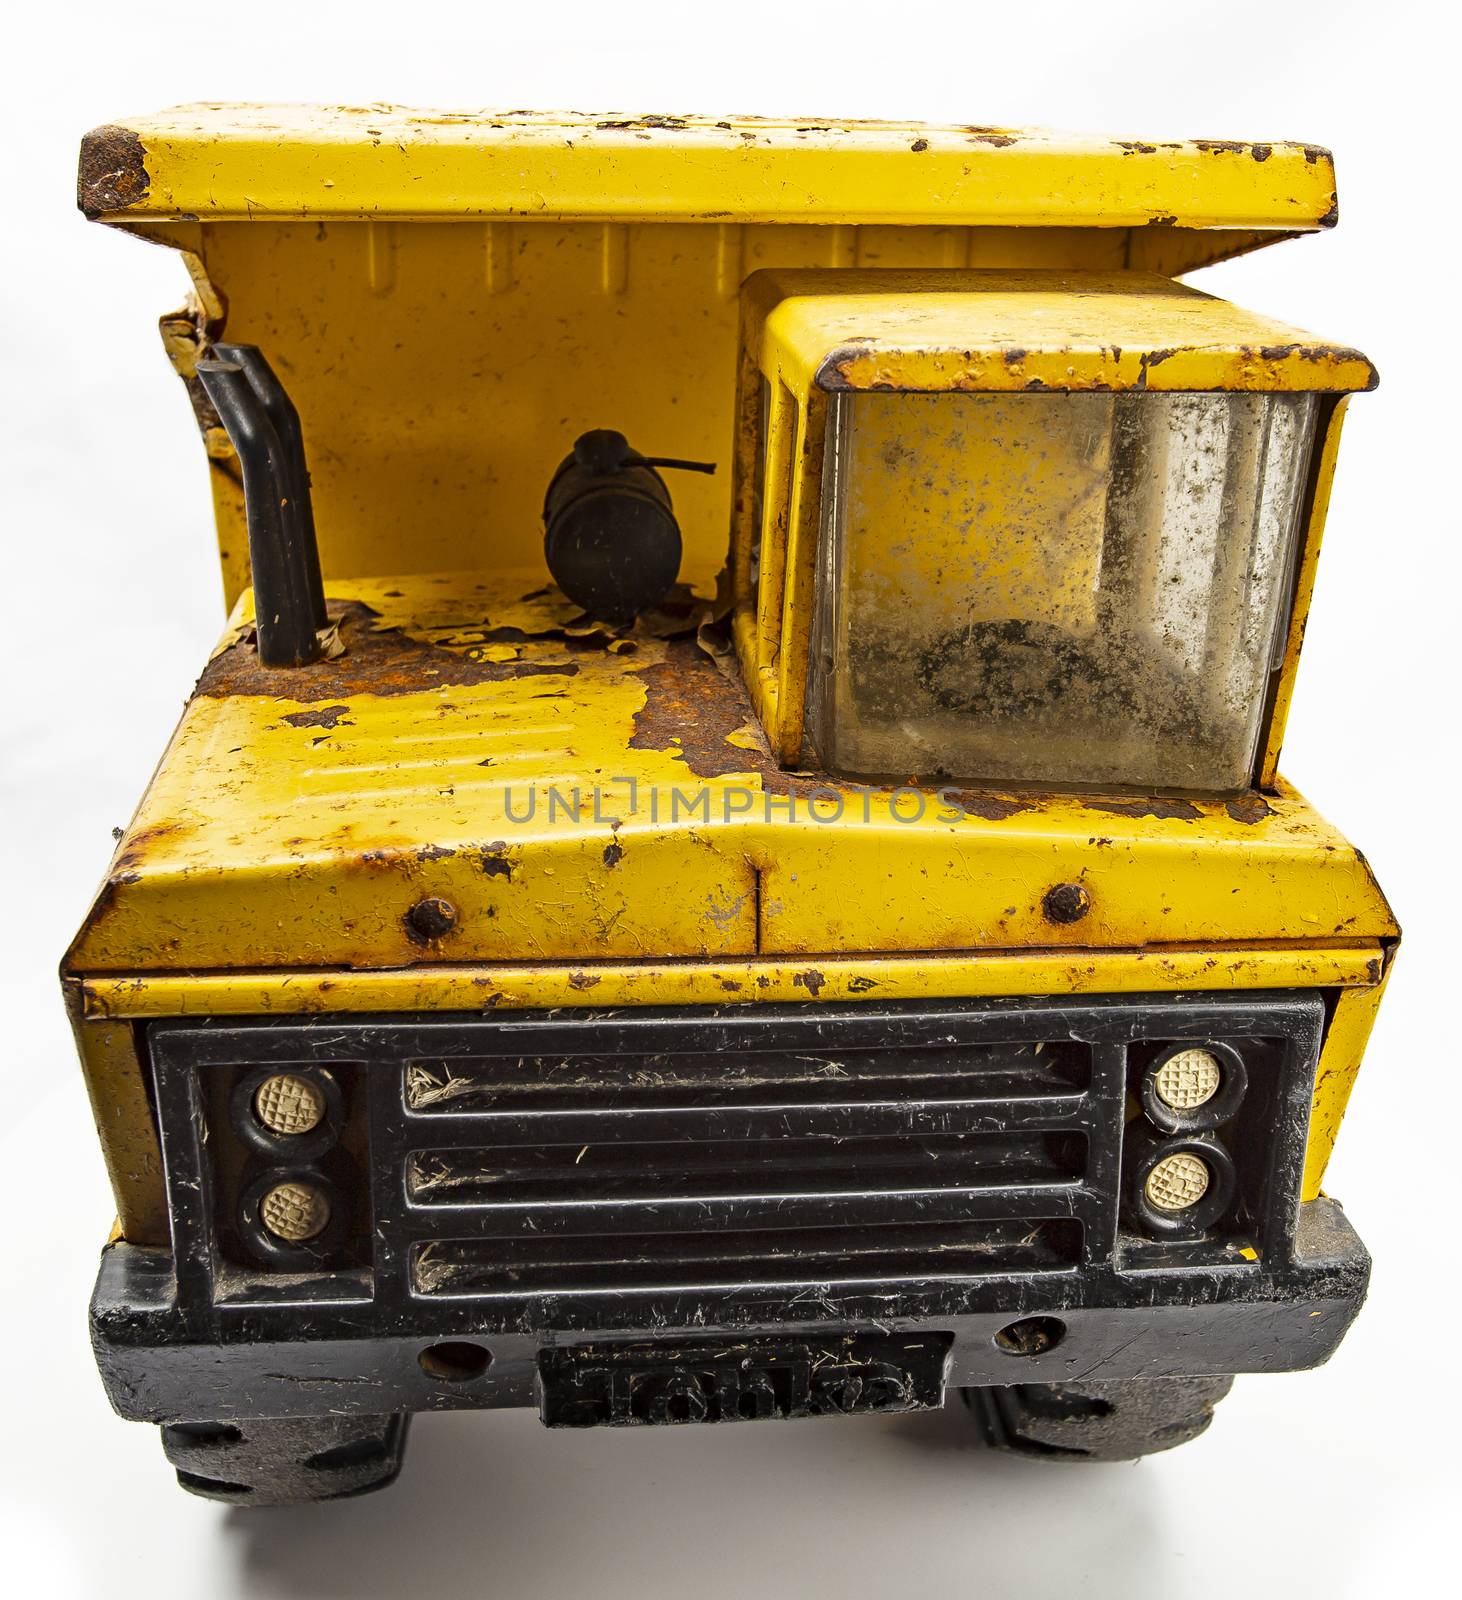 Vintage yellow toy truck by mypstudio